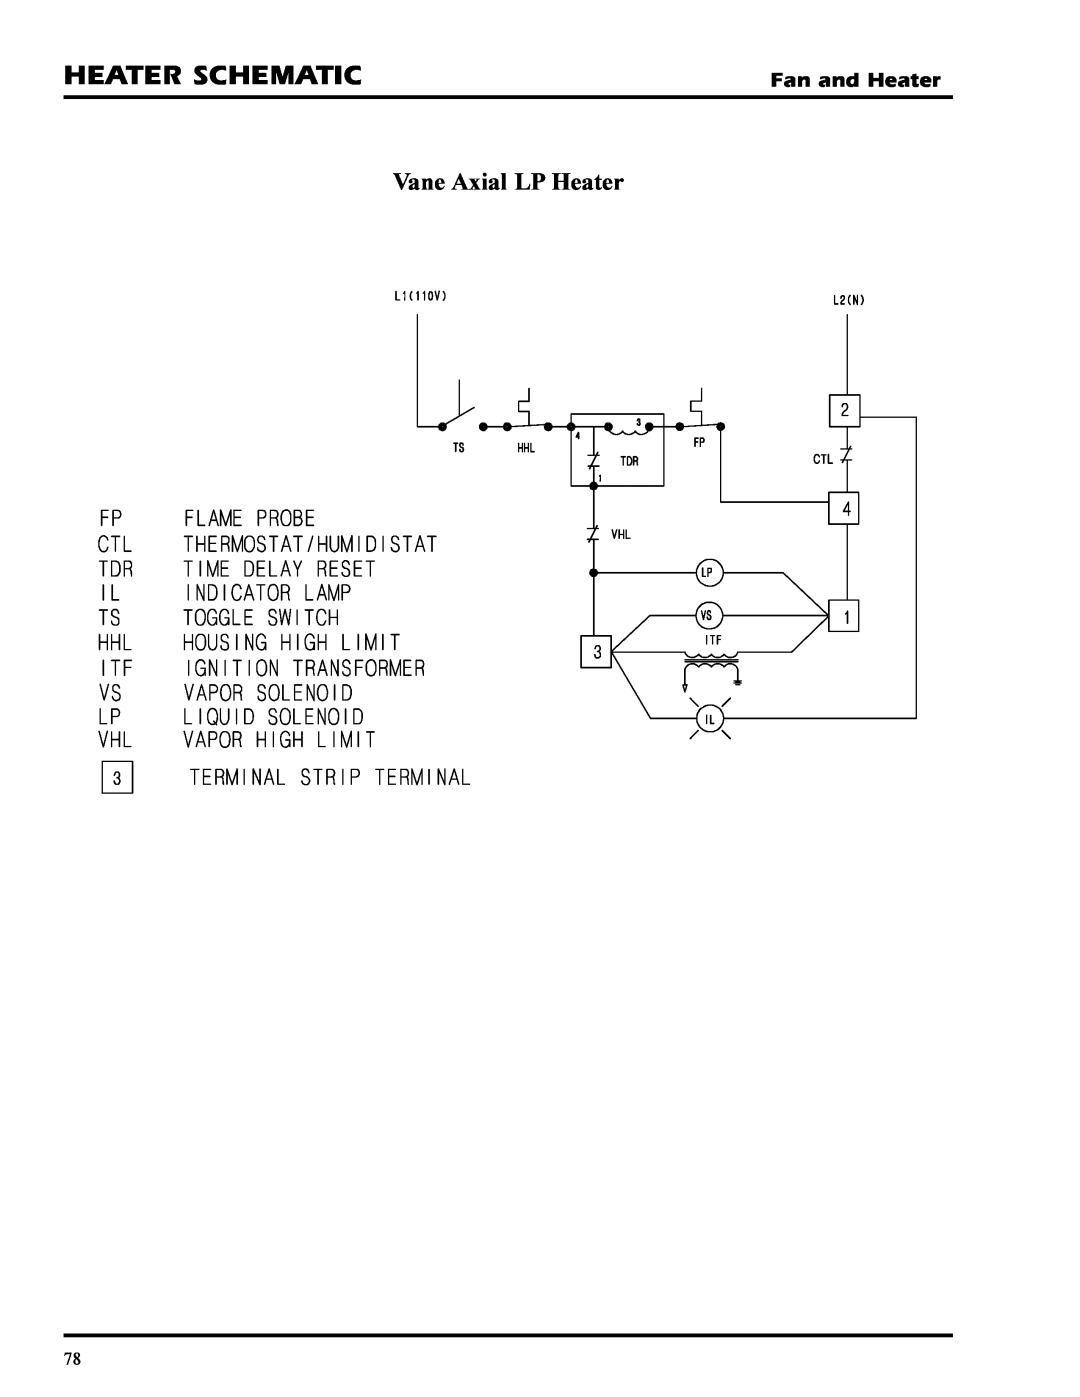 GSI Outdoors PNEG-377 service manual Heater Schematic, Vane Axial LP Heater, Fan and Heater 